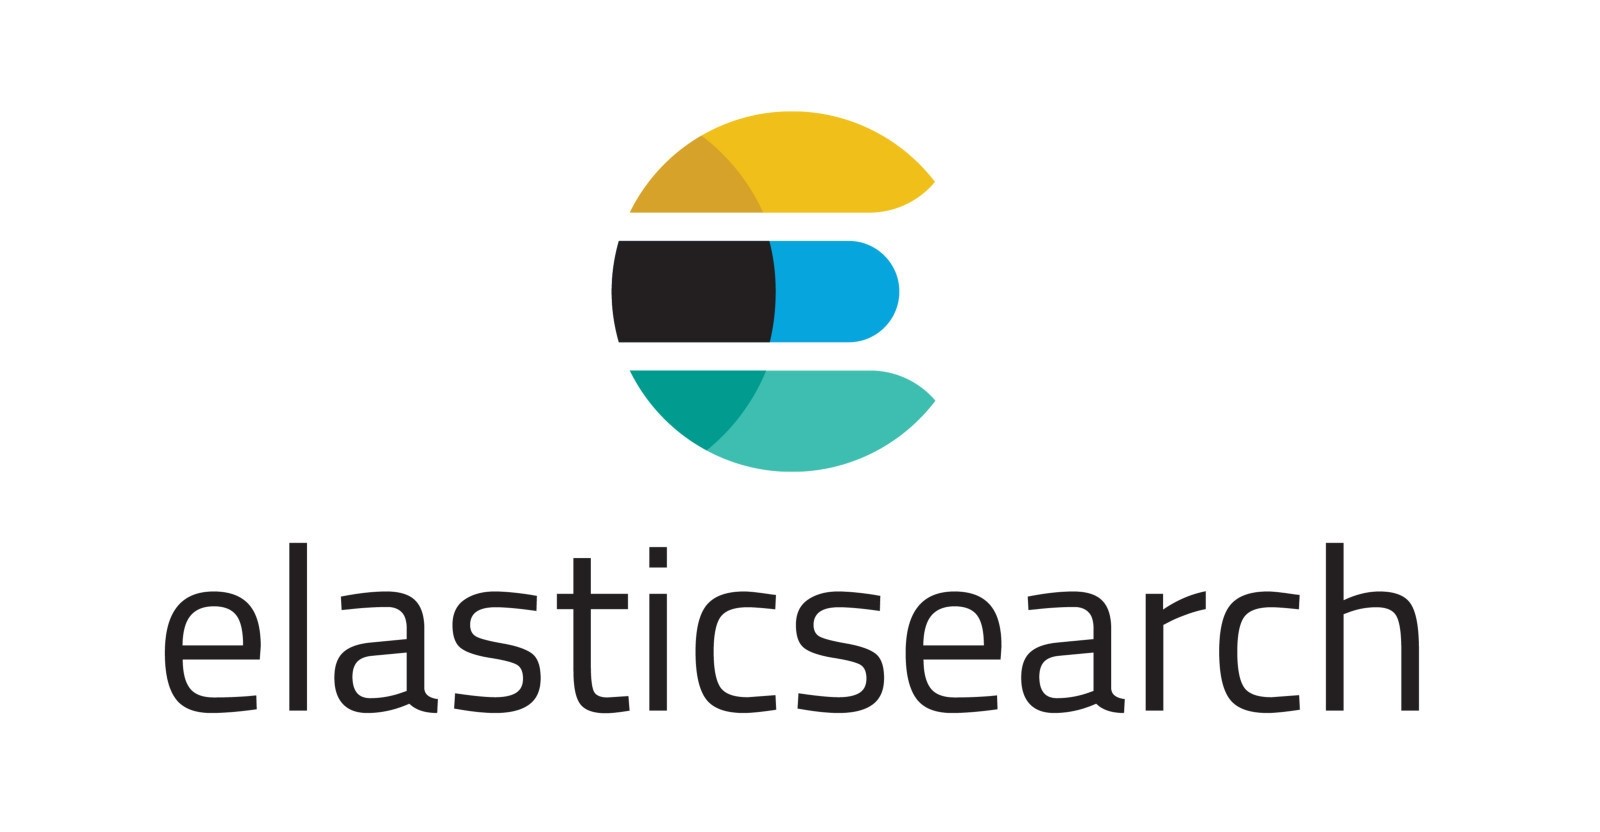 Elasticsearch cluster